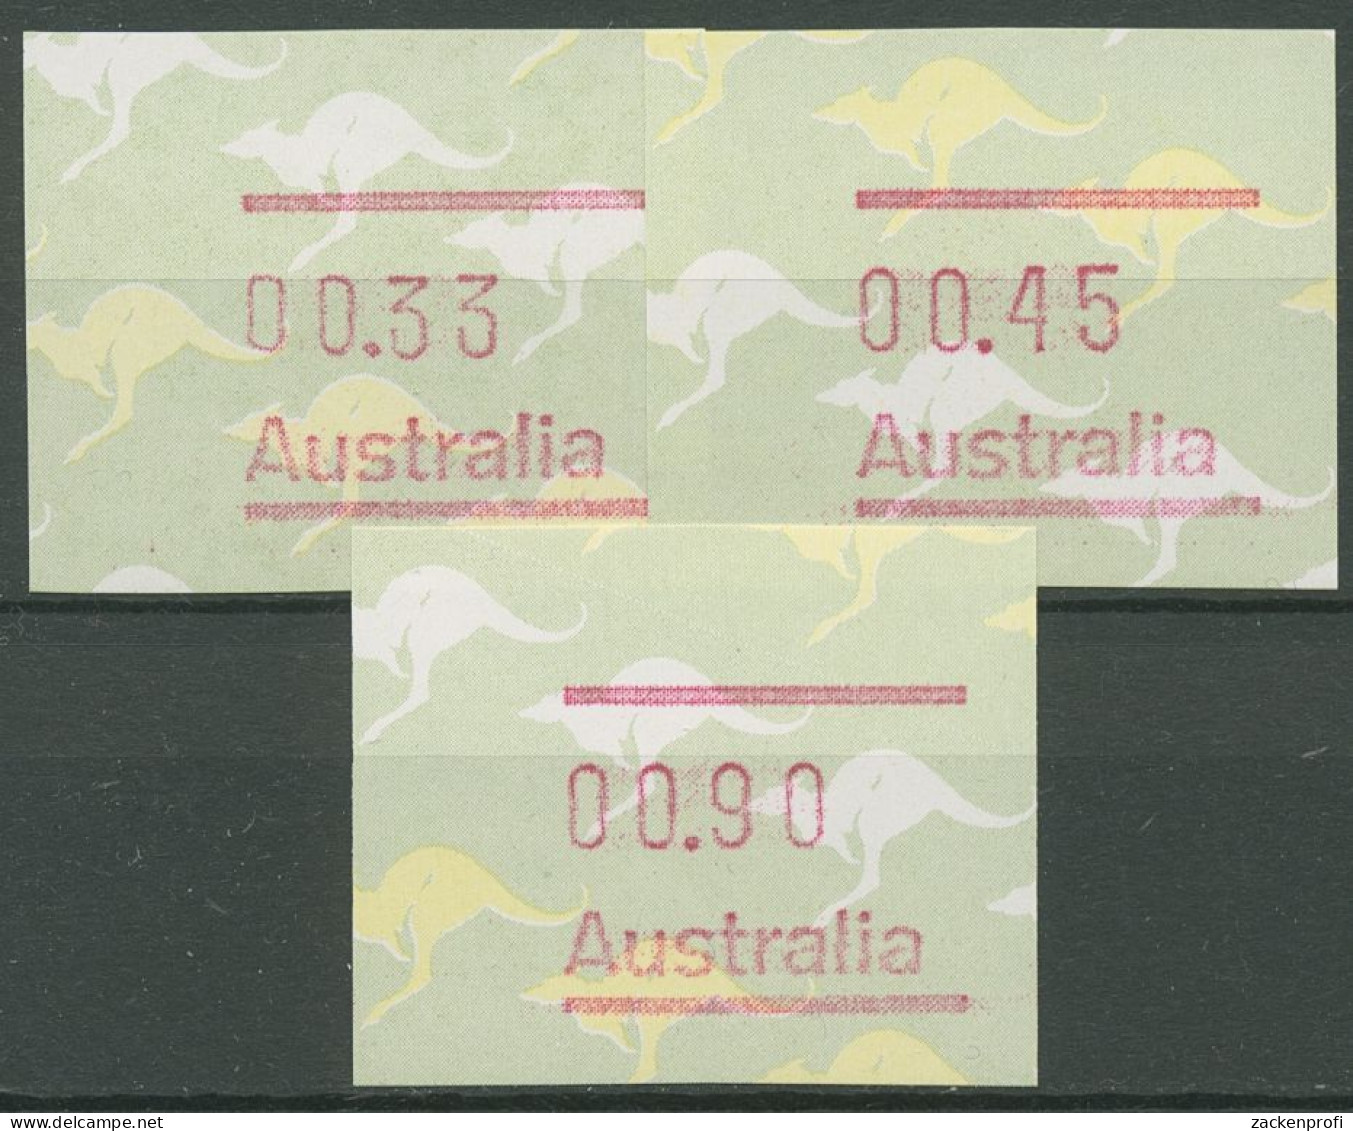 Australien 1985 Känguruh Tastensatz Automatenmarke 3 S1 Postfrisch - Viñetas De Franqueo [ATM]